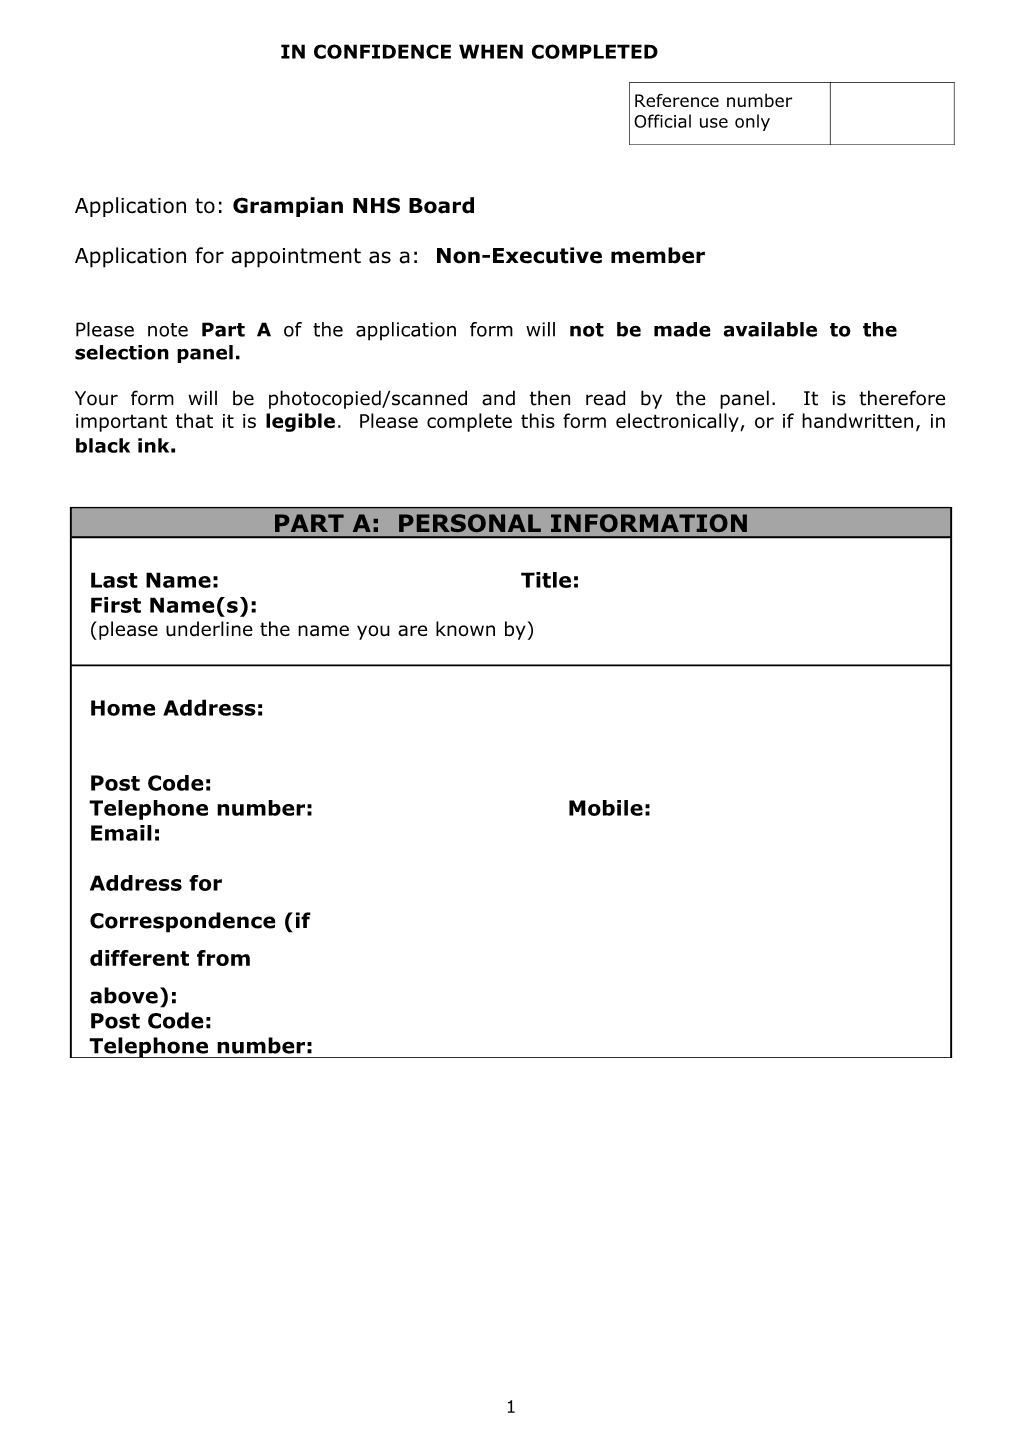 Alternative Pilot for Non-Executive Board Members - Application Form